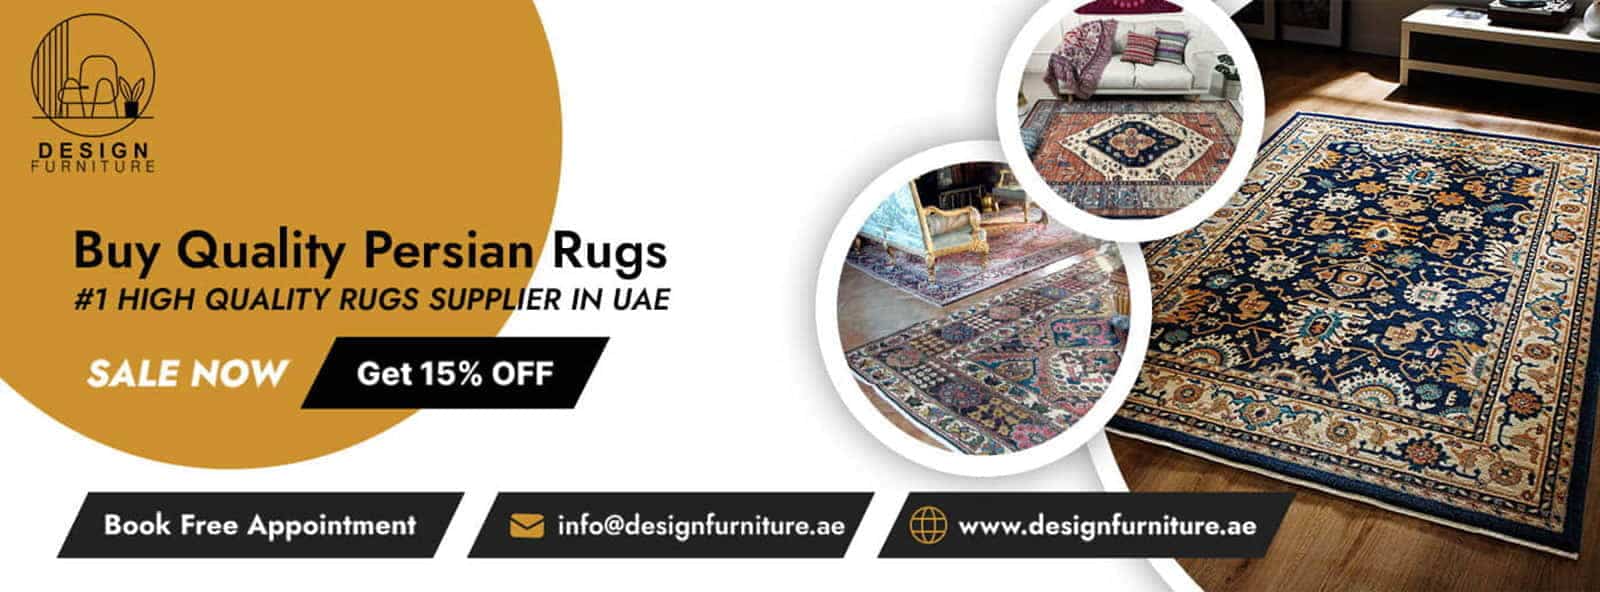 Persian rugs banner image